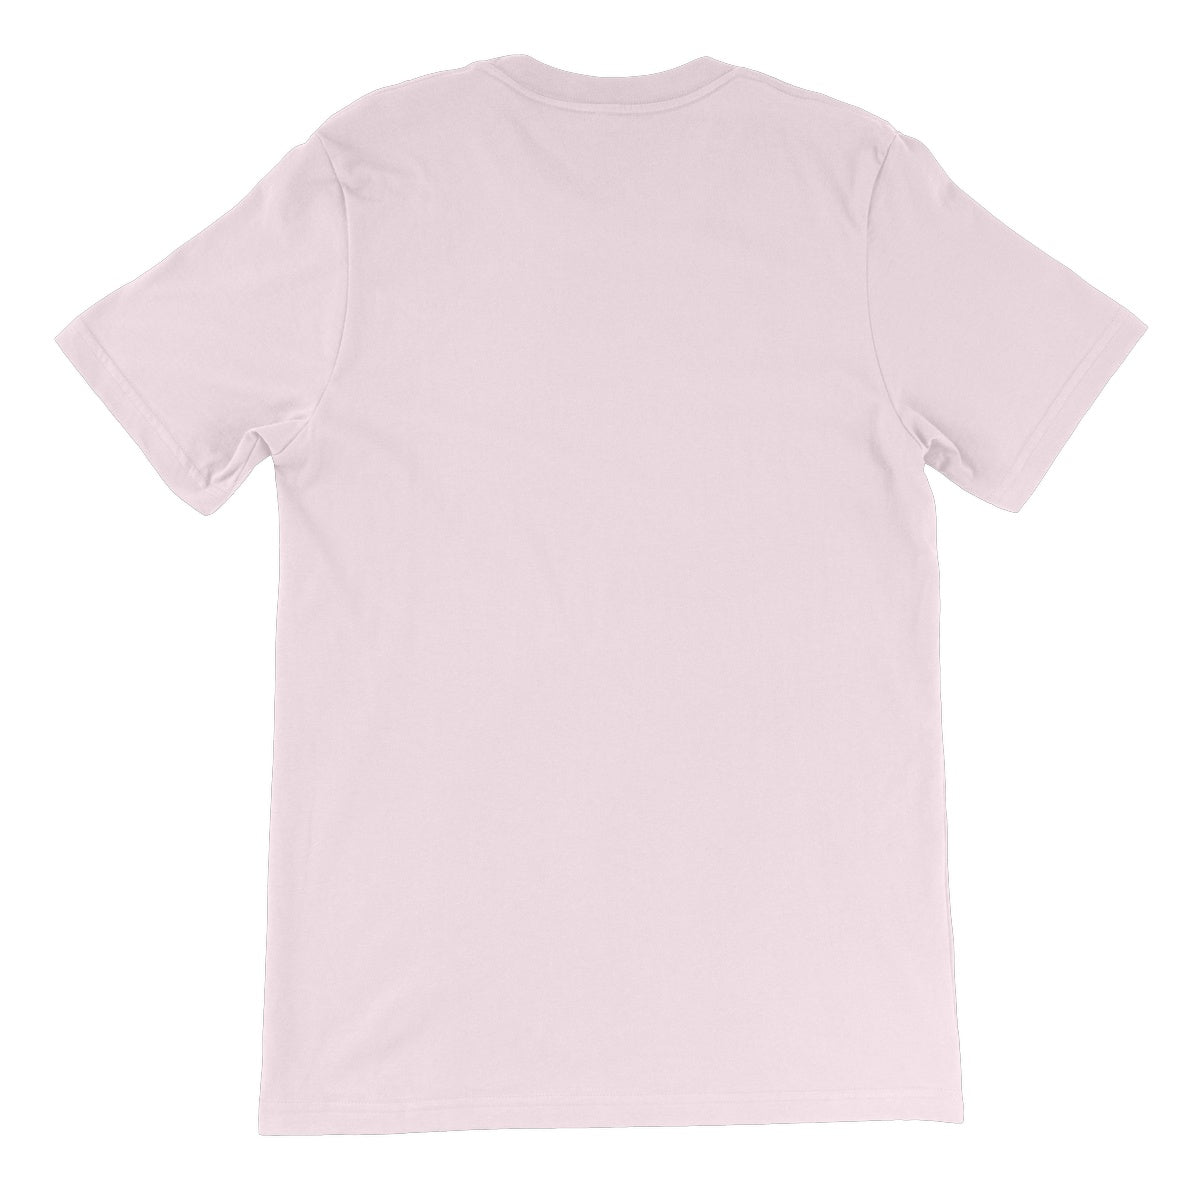 Practically Perfect Illustrated Tee Unisex Short Sleeve T-Shirt